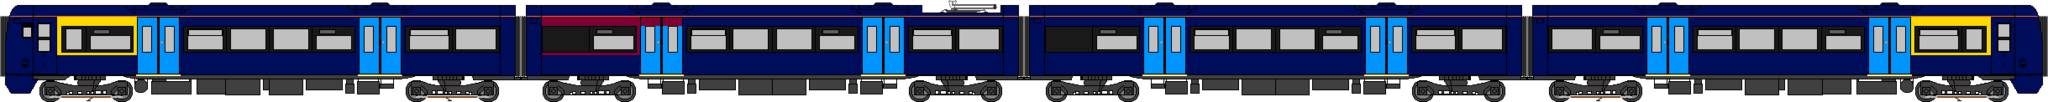 Southeastern Class 377